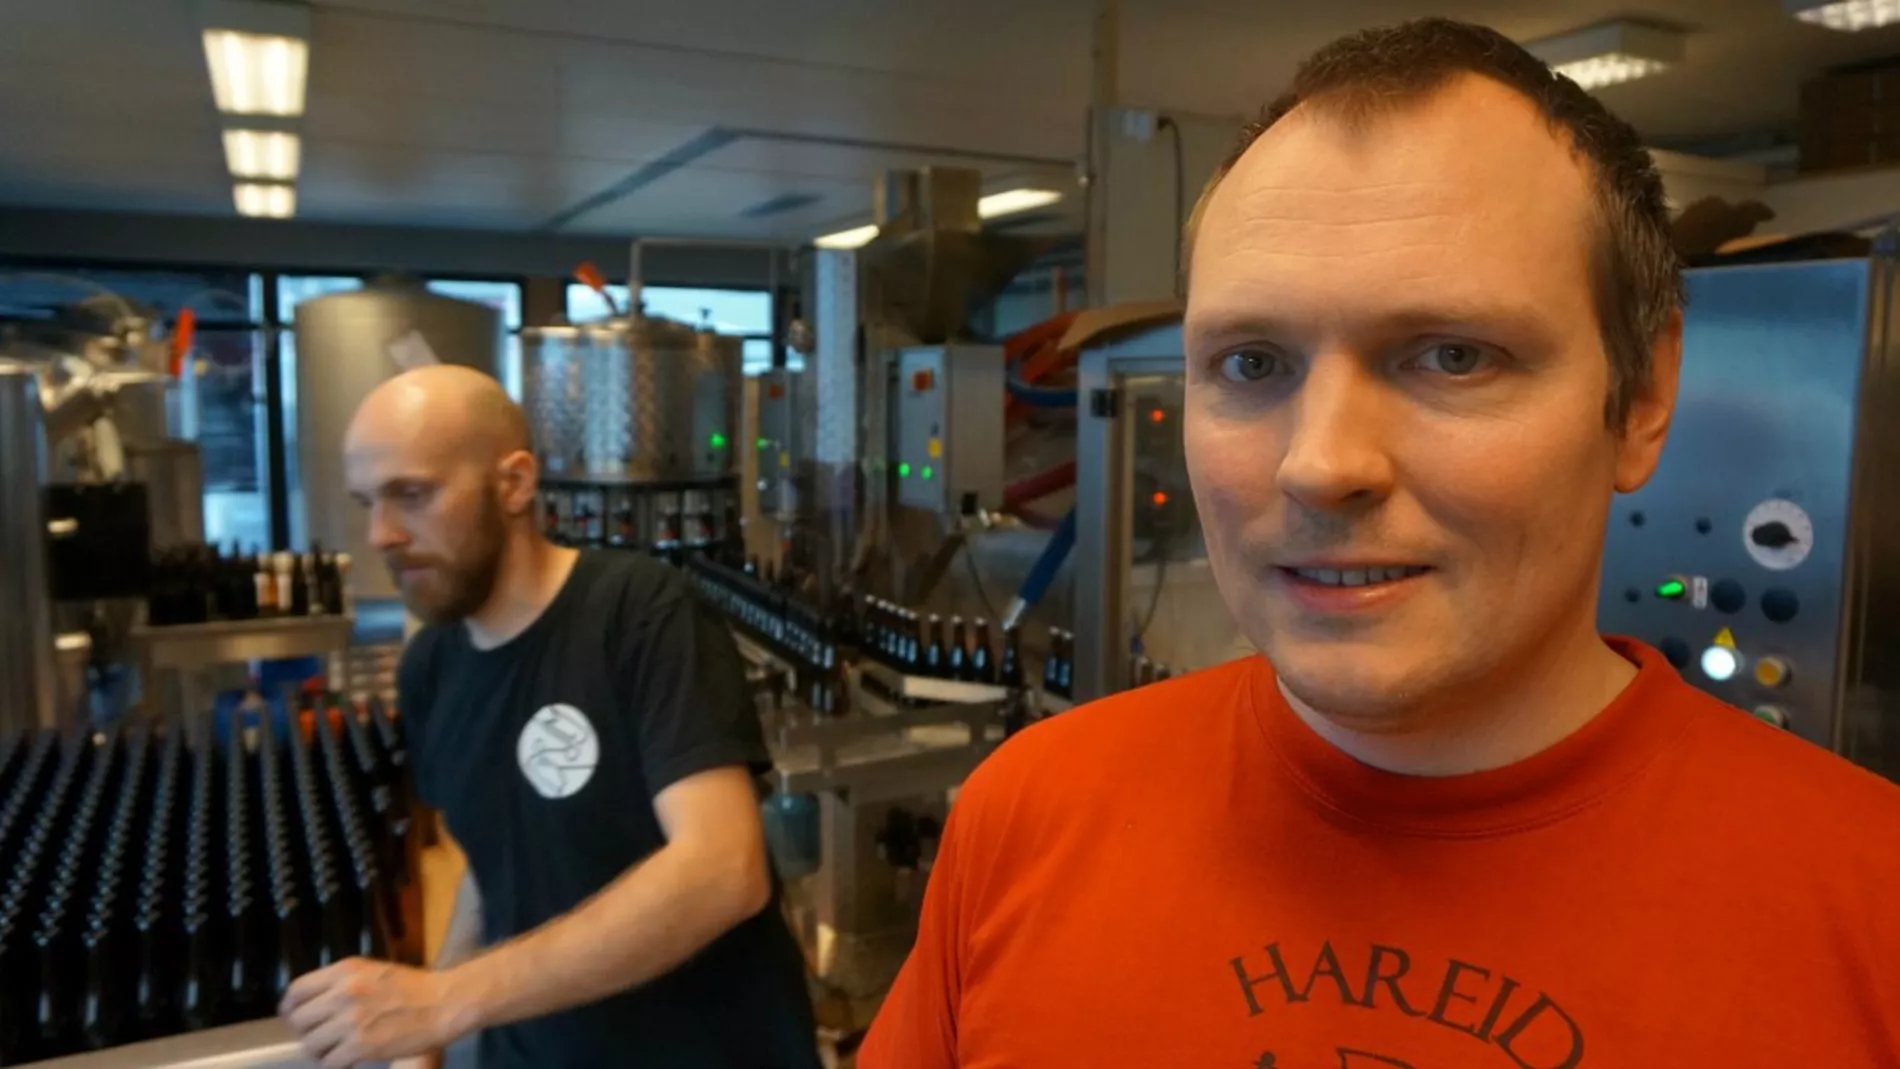 Familie crowdfunding sikra bryggeriet